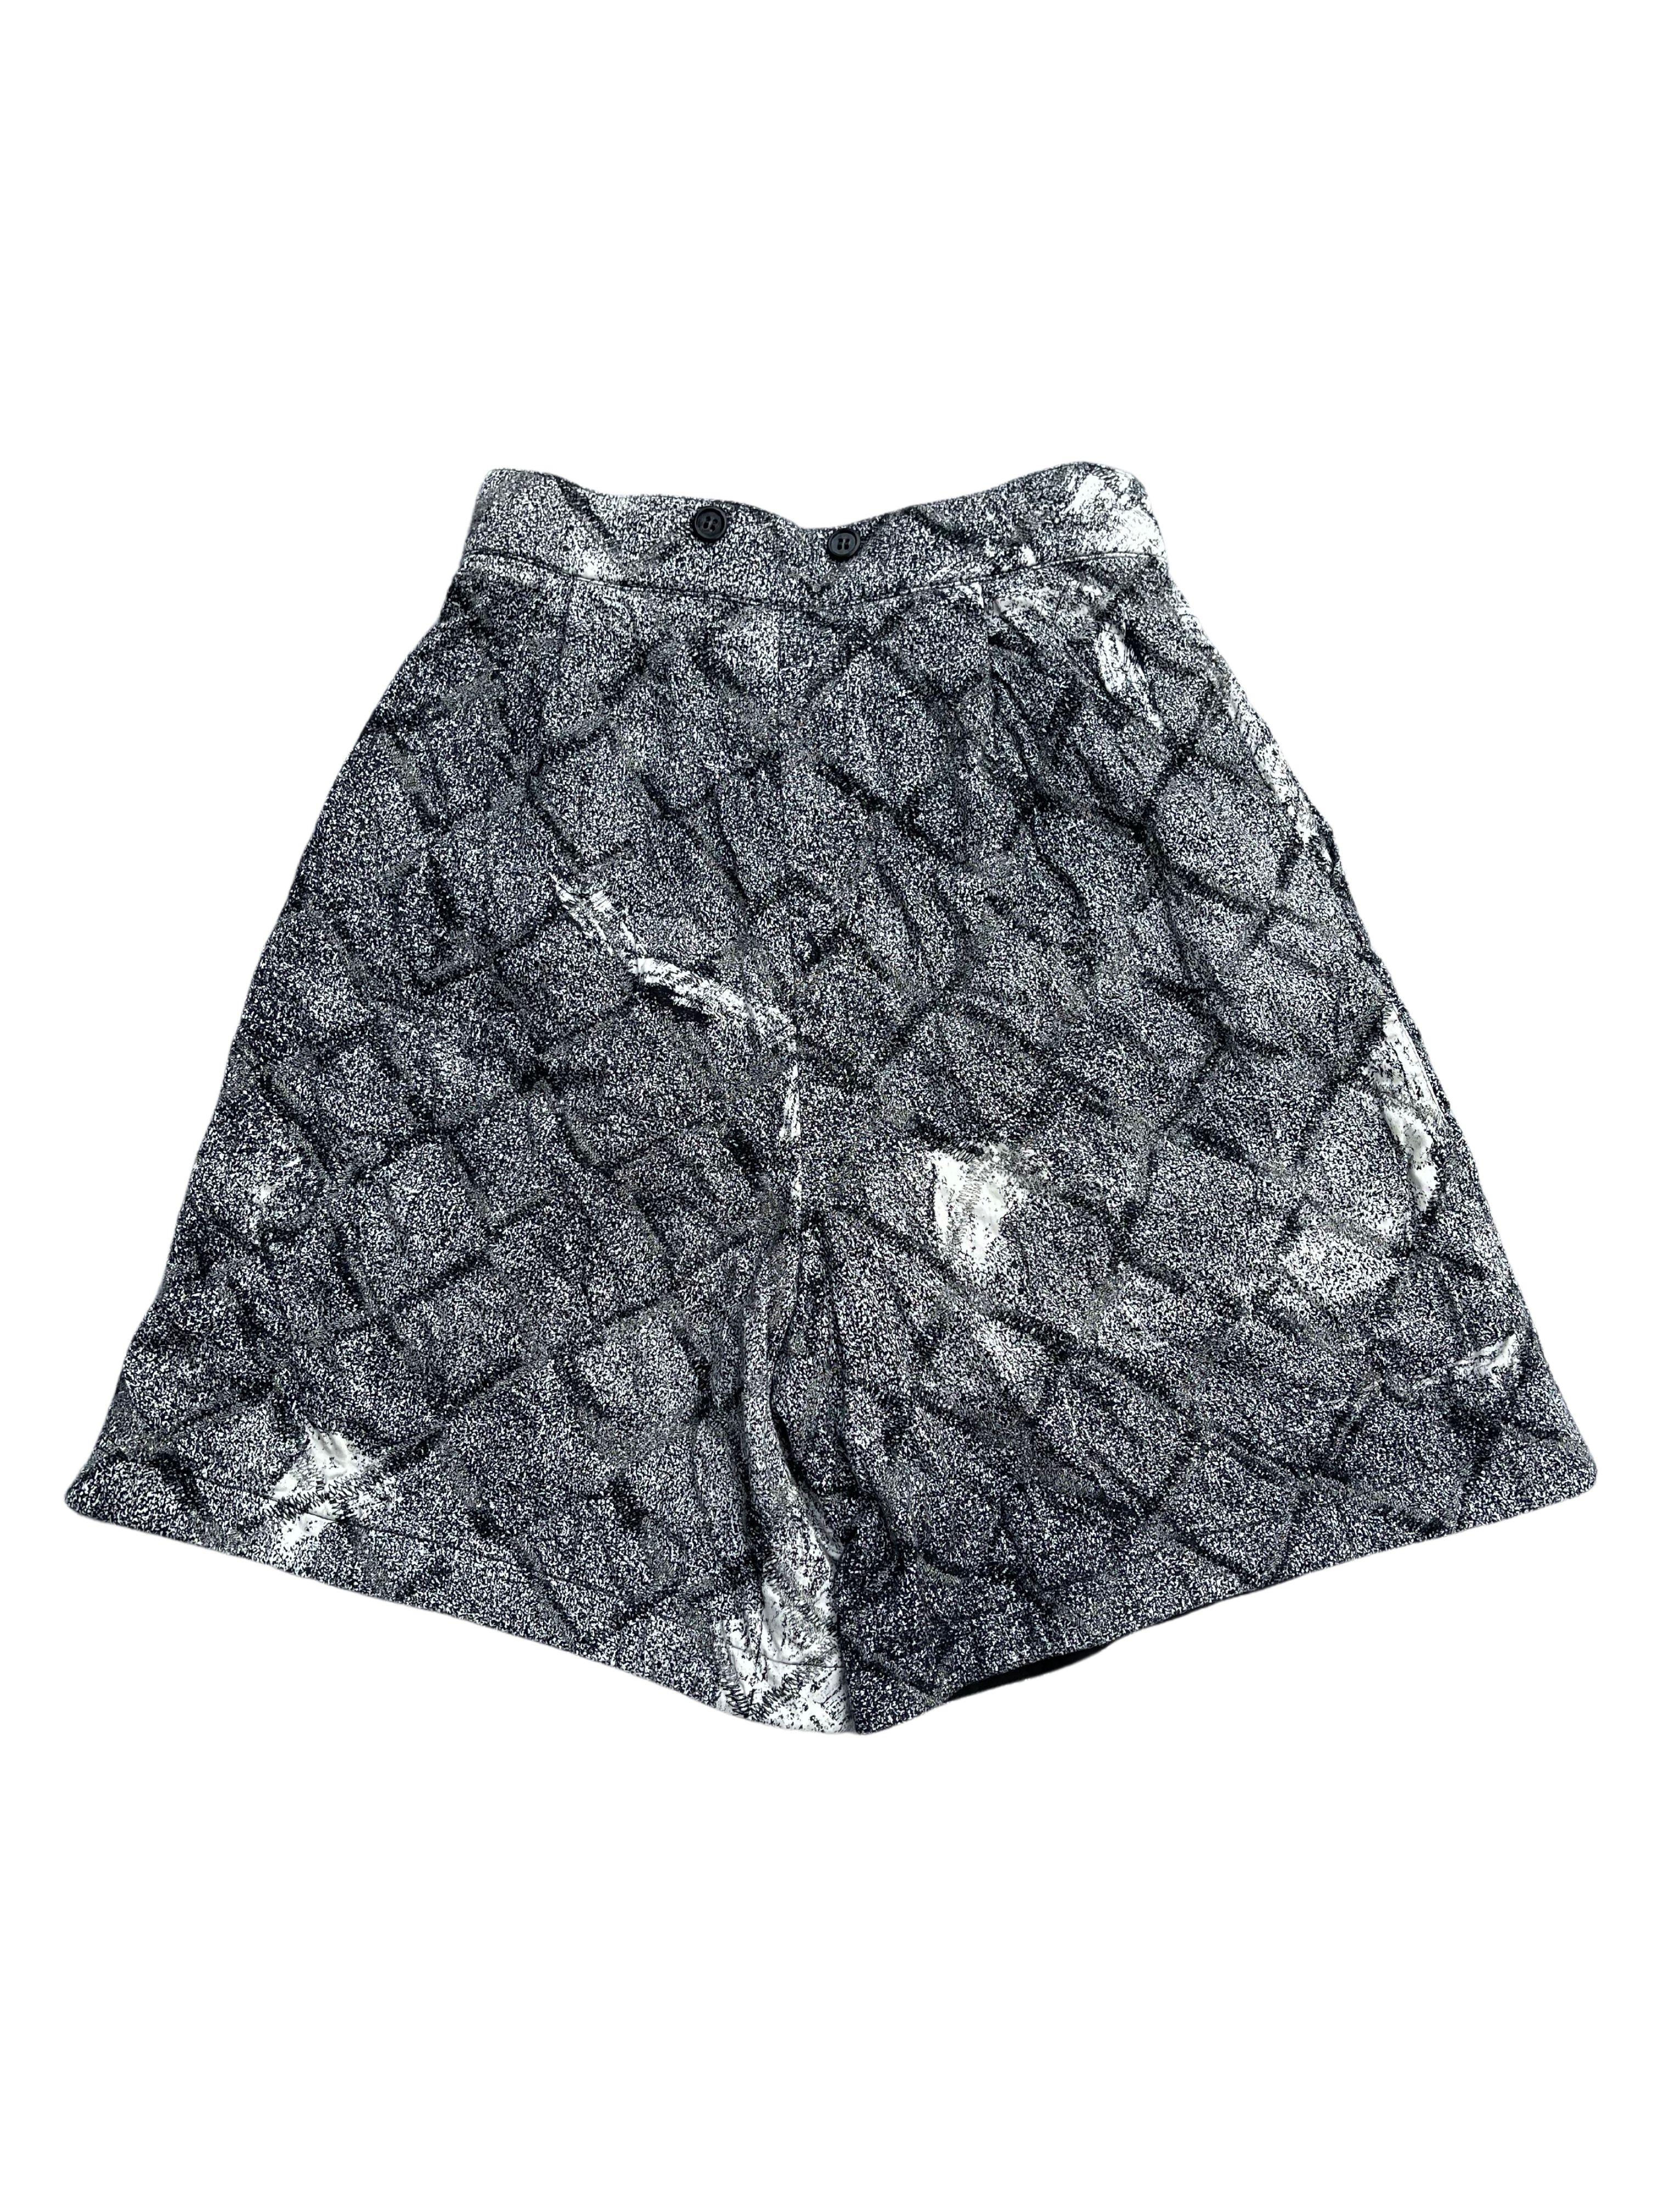 Gray Issey Miyake Diamond Python Shorts, 1980's For Sale